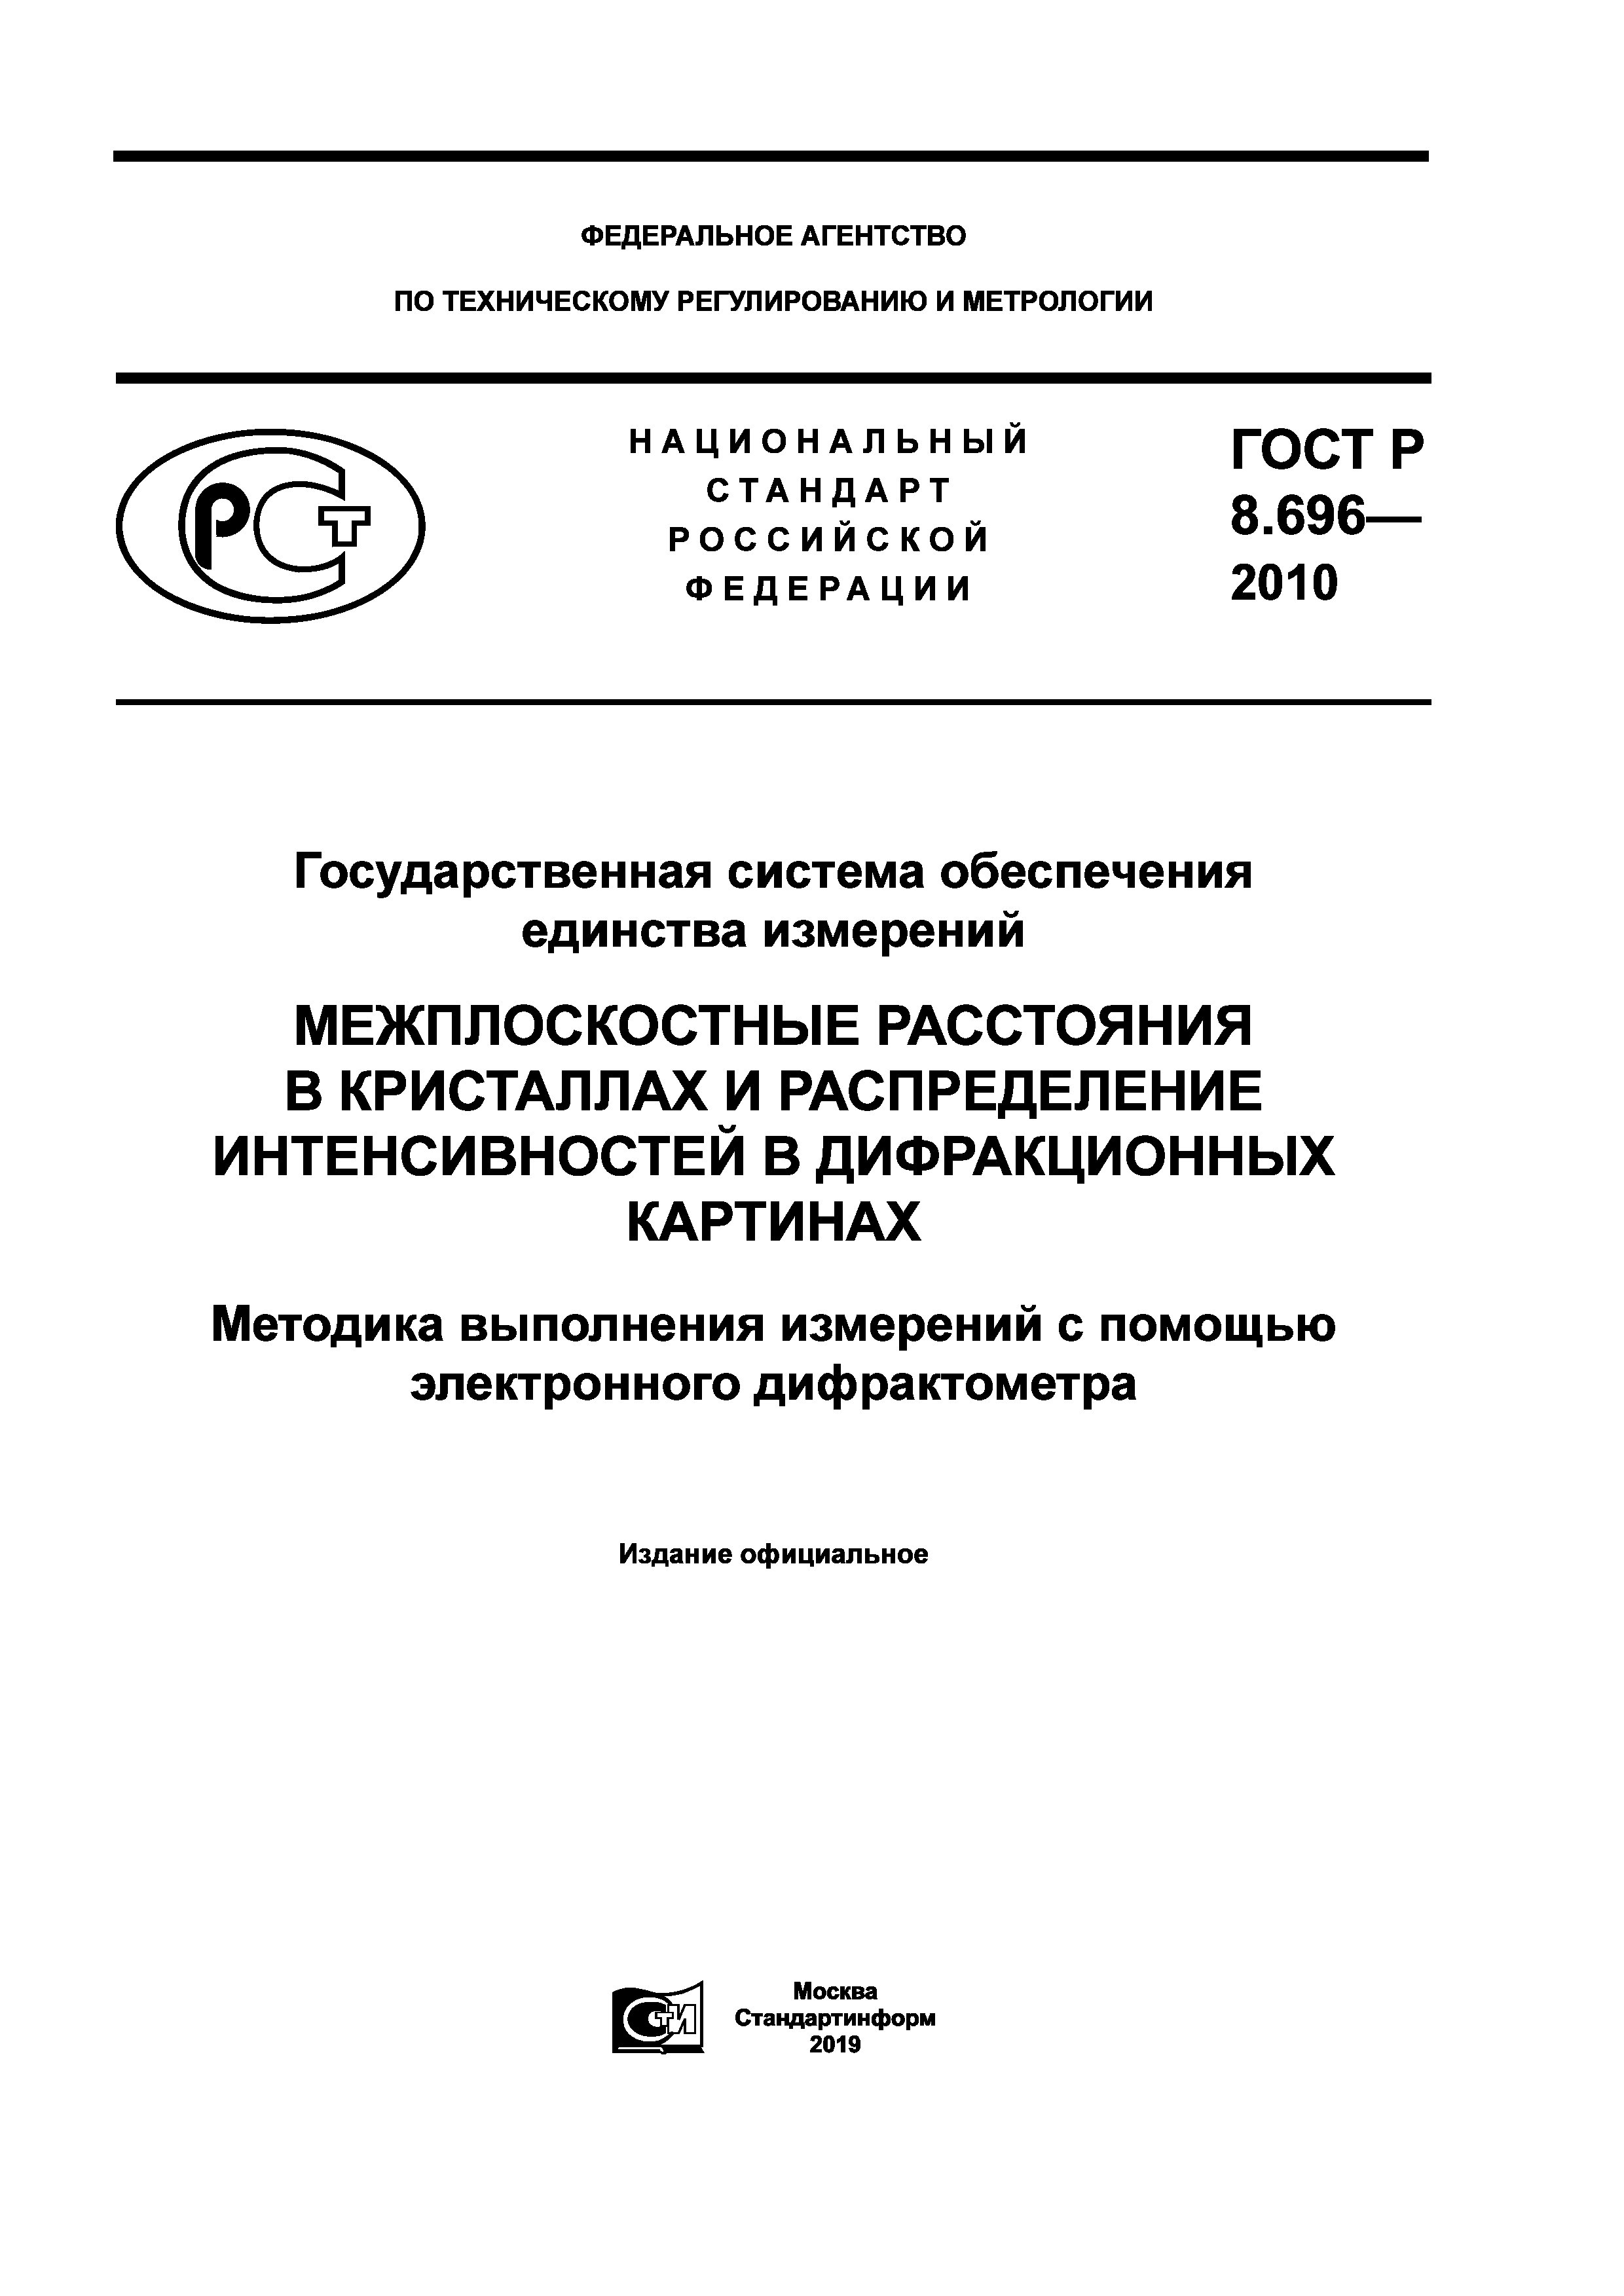 ГОСТ Р 8.696-2010